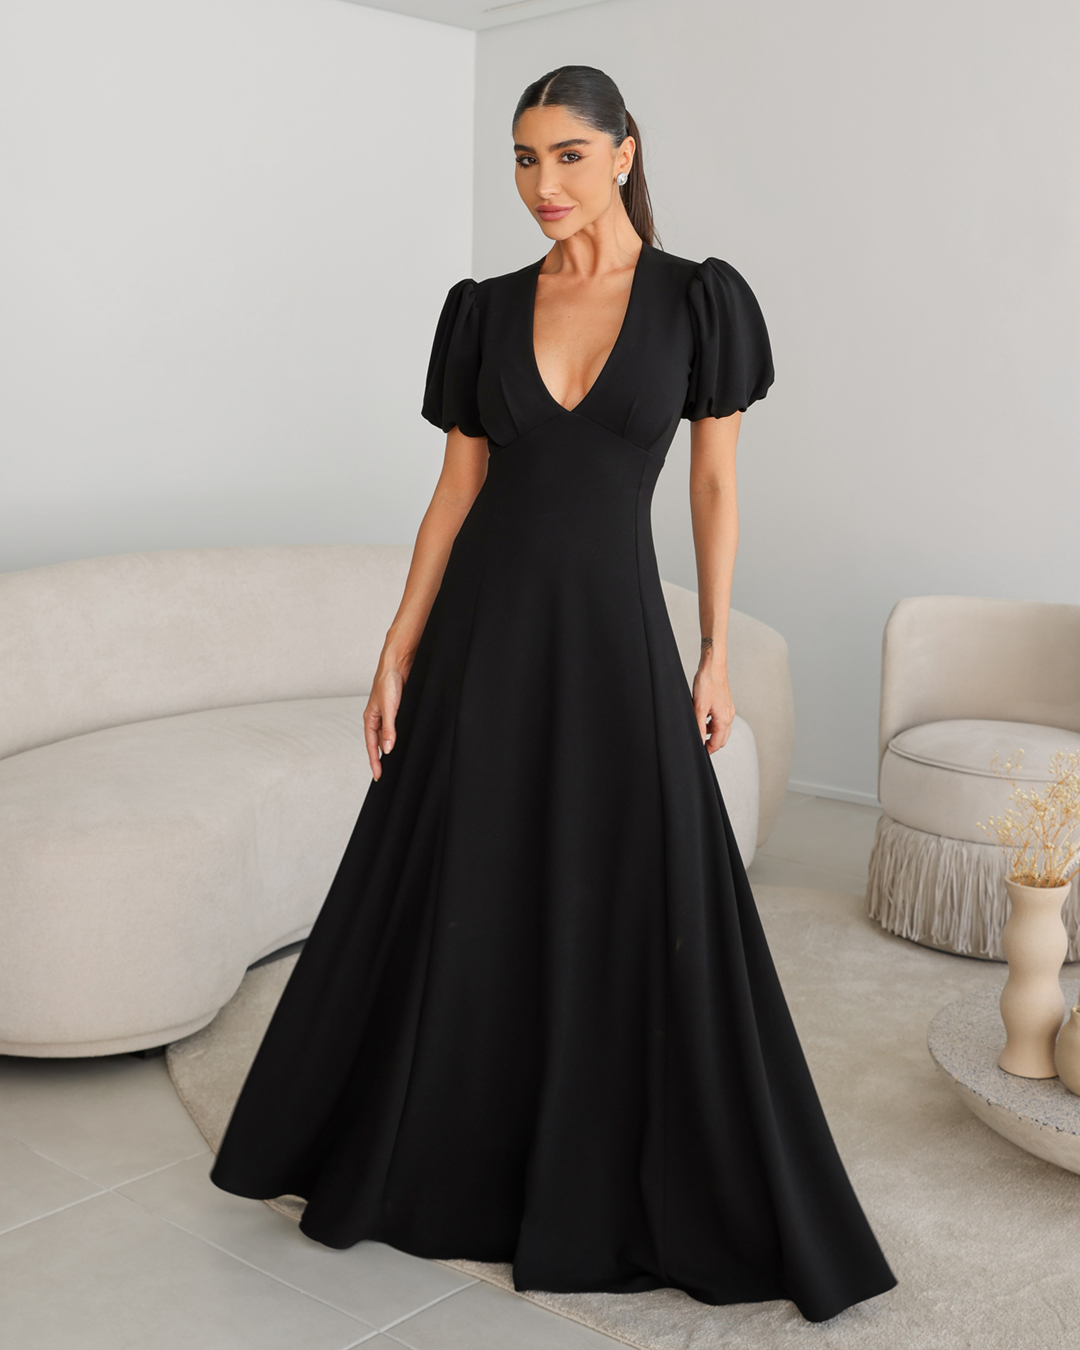 Dot Clothing - Dress Dot Clothing Long Sleeve Black - 2106PRETO